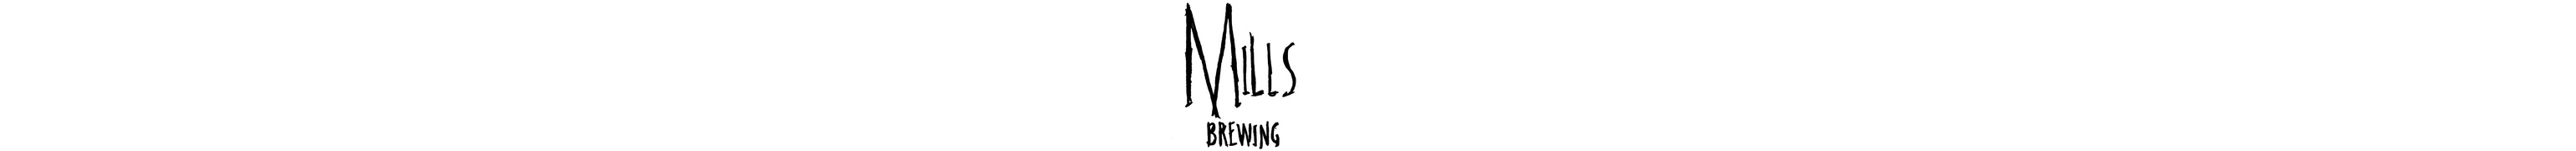 Mills Brewing